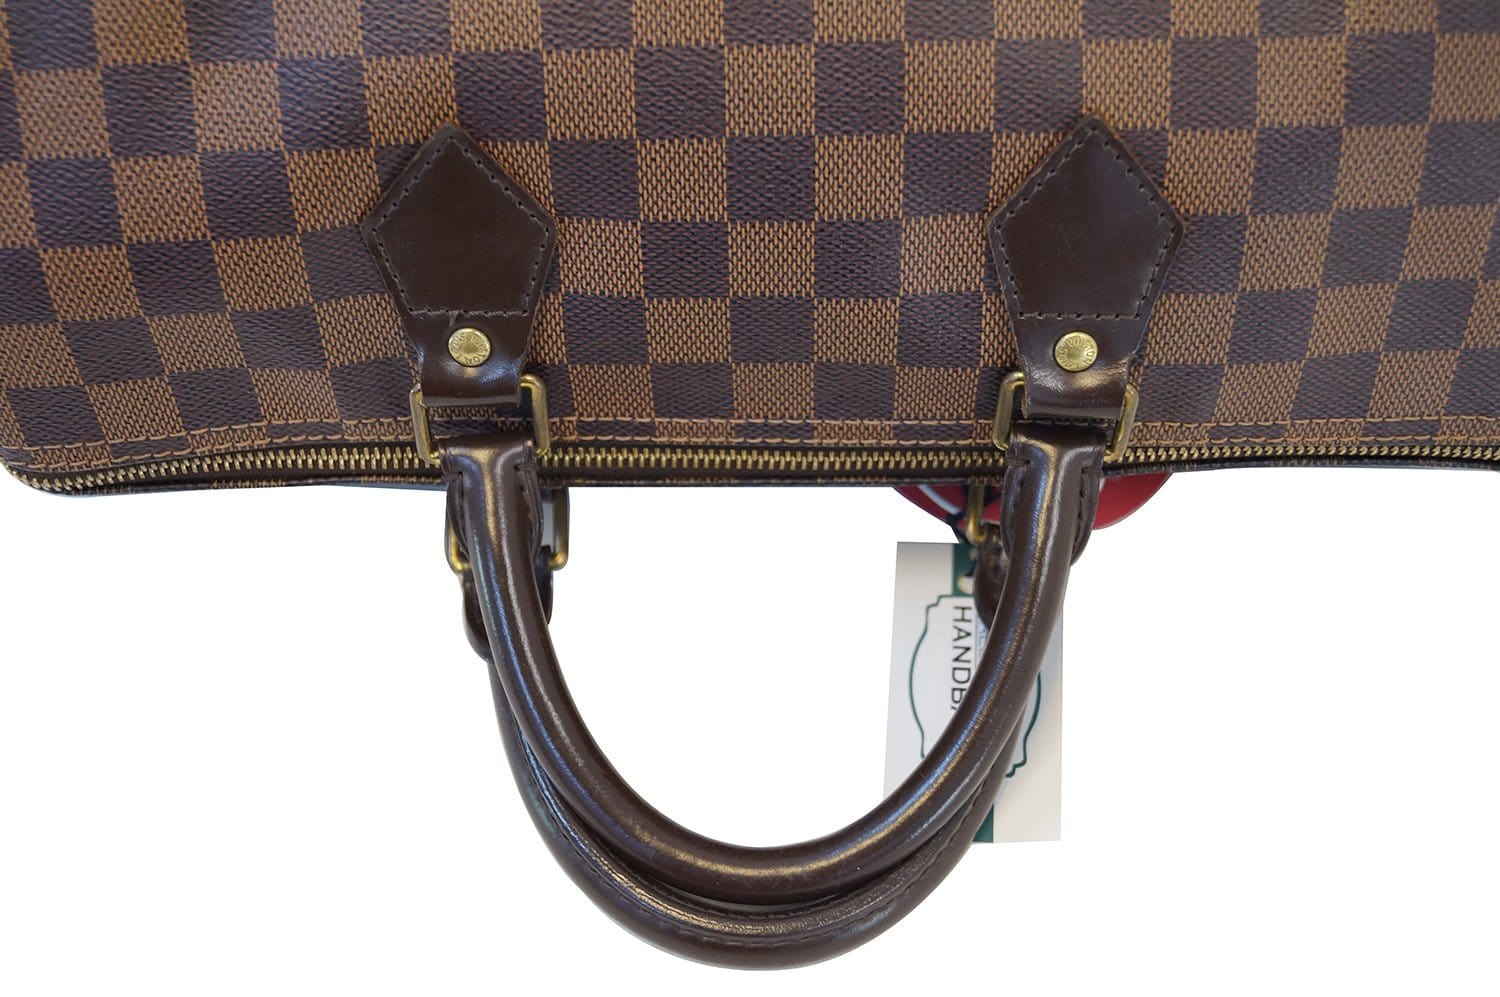 LOUIS VUITTON SPEEDY 35 Damier Ebene Handbag £449.00 - PicClick UK